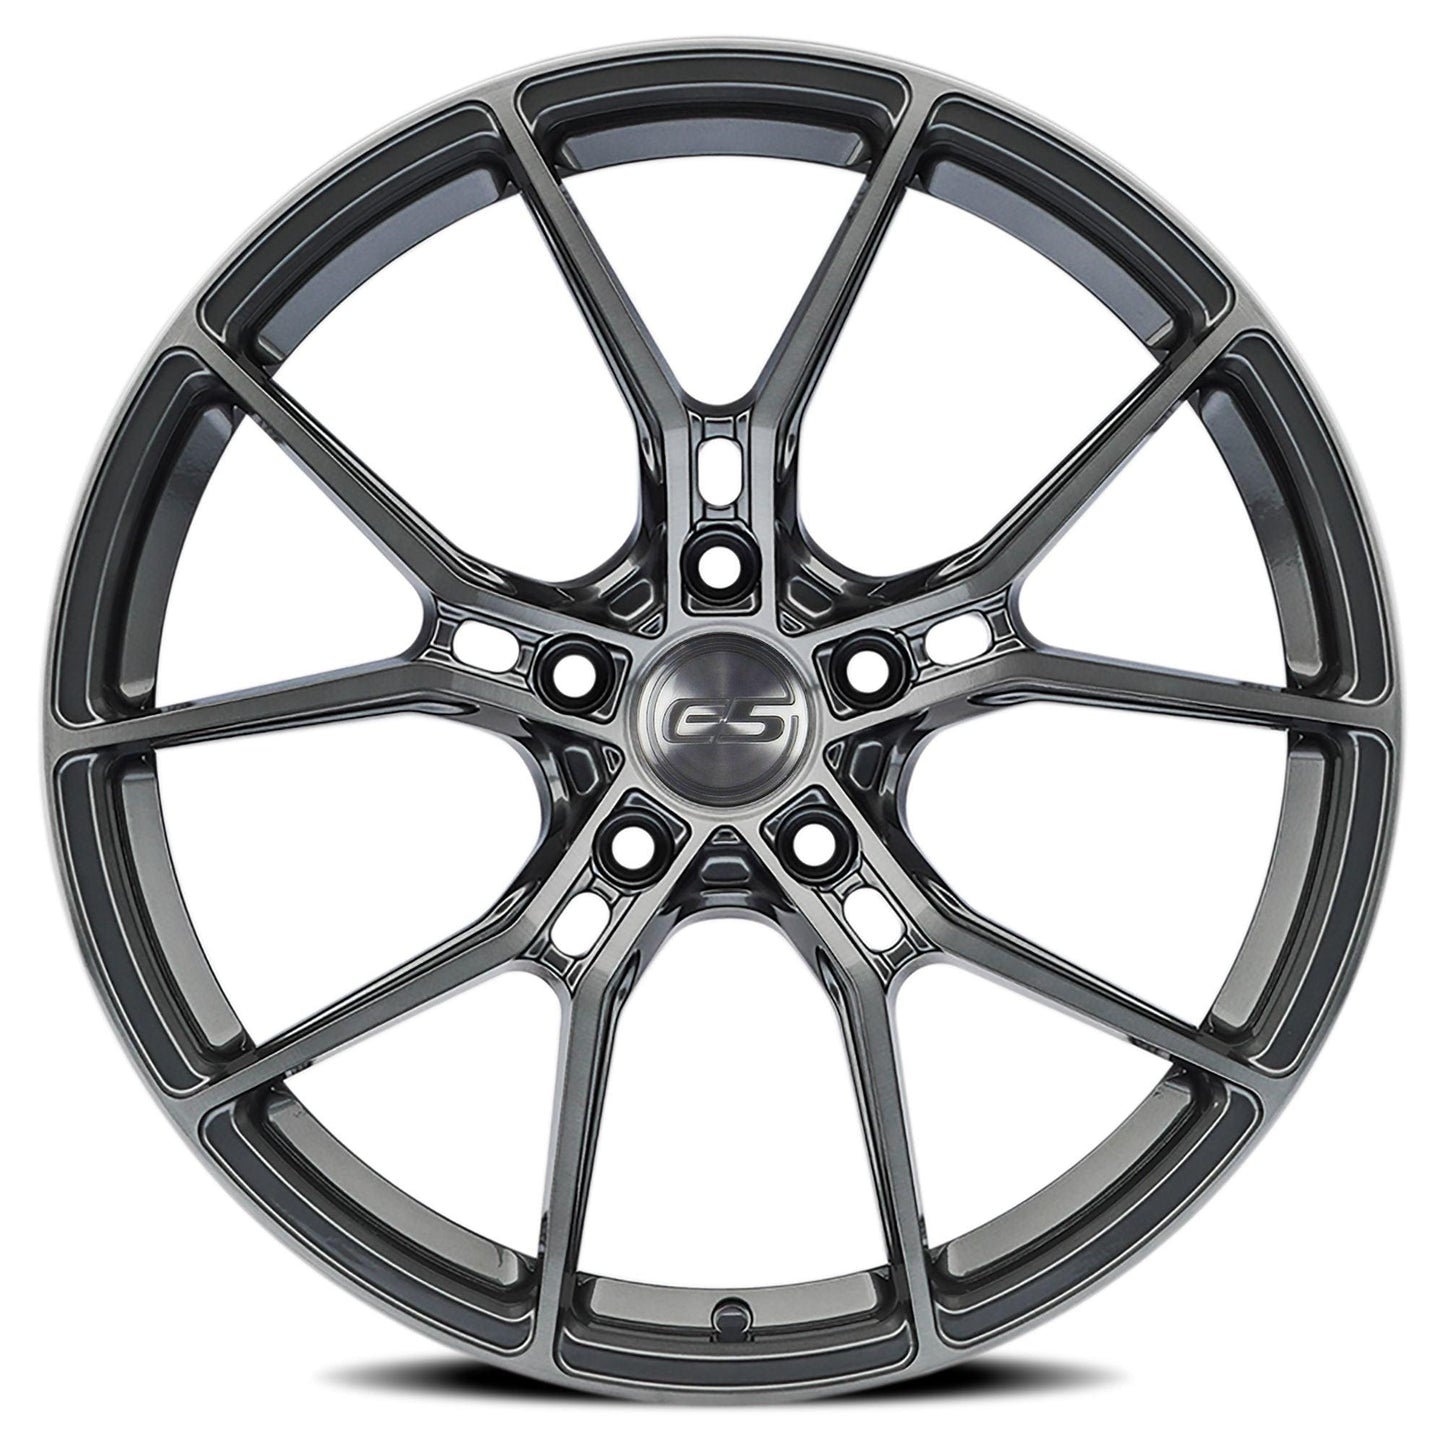 E5 Daytona 20x9 / 21x12 wheels for C8 Corvette Z51 - Gem Motorsports